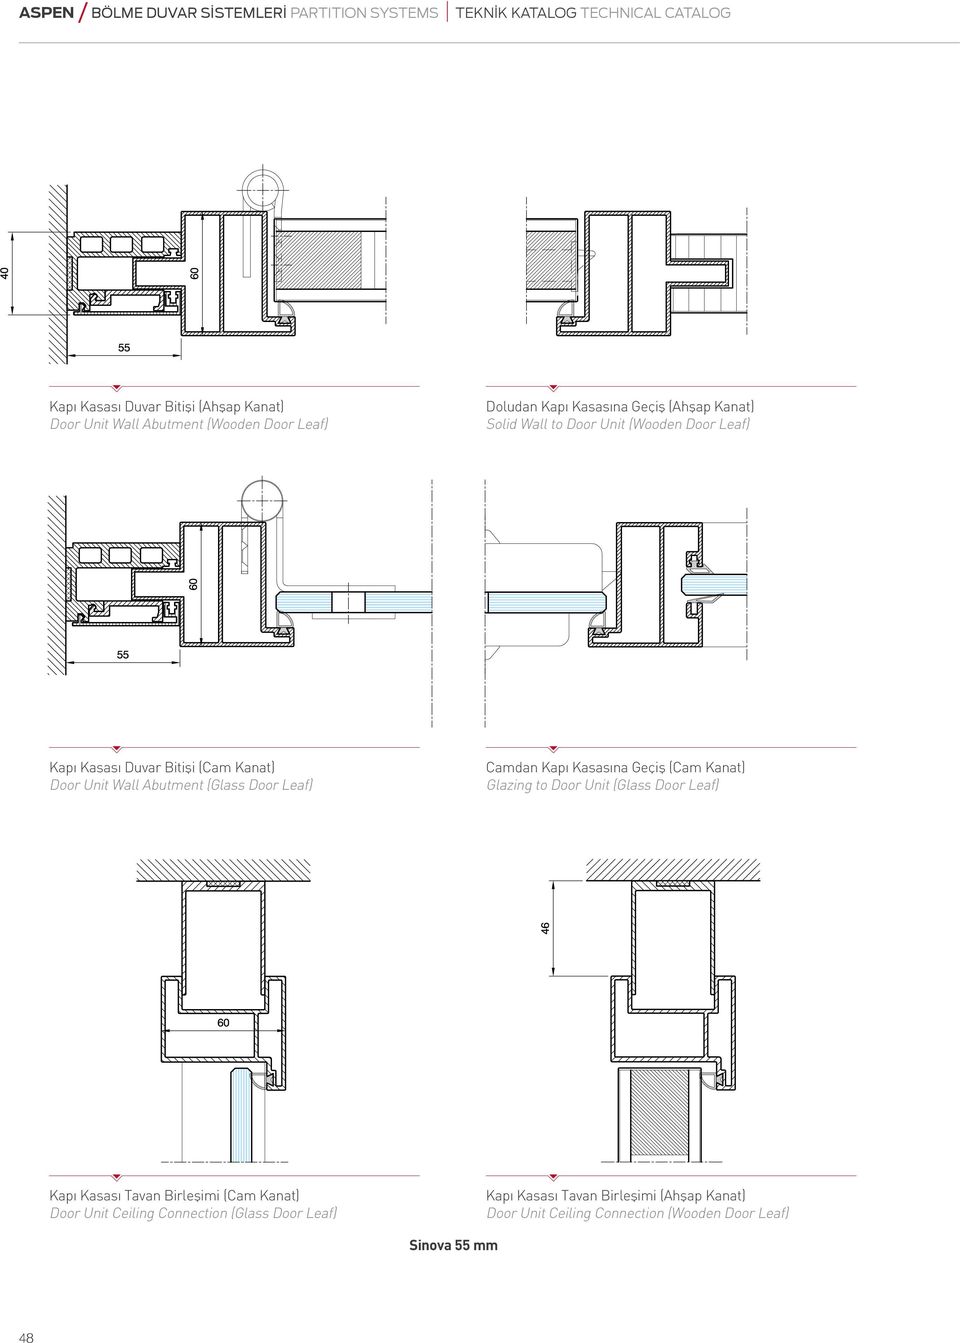 Unit Wall Abutment (Glass Door Leaf) Camdan Kapı Kasasına Geçiş (Cam Kanat) Glazing to Door Unit (Glass Door Leaf) Kapı Kasası Tavan Birleşimi (Cam